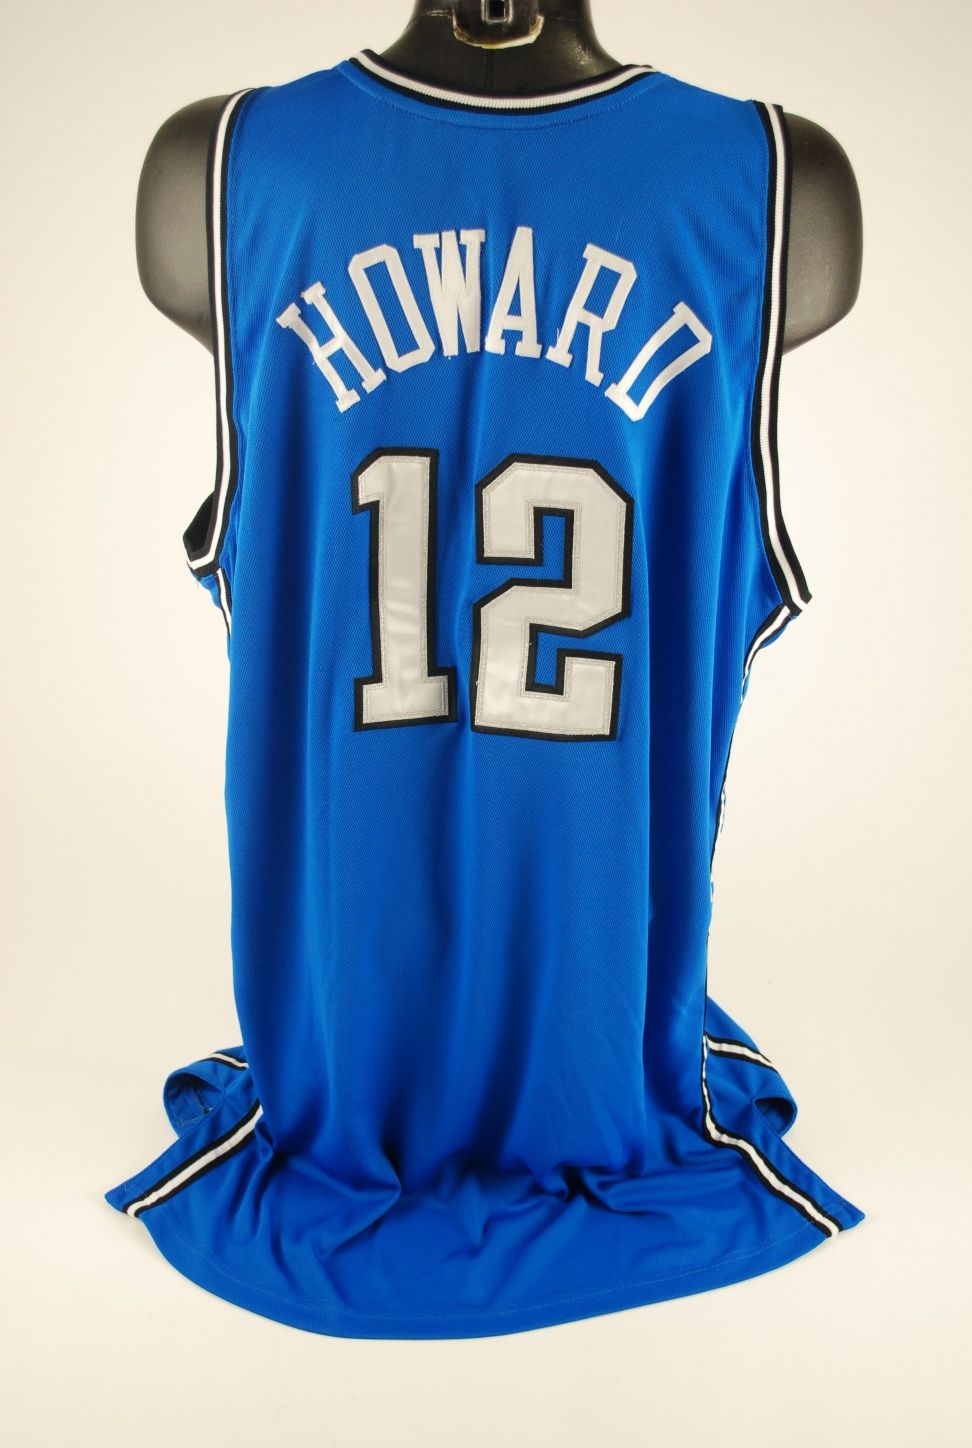 Dwight Howard Rookie 2004-05 Bowman #129 Orlando Magic